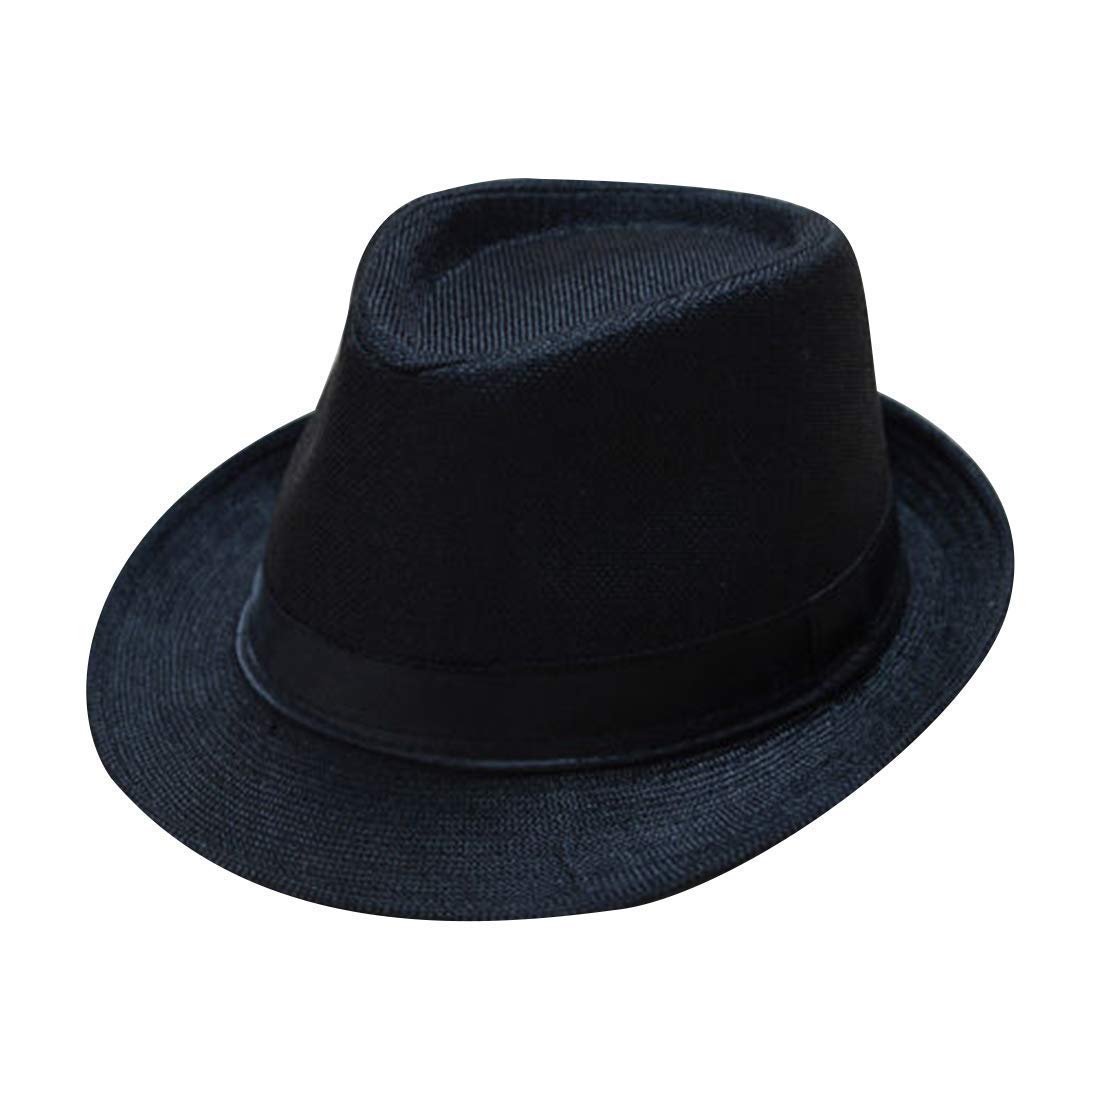 Woshilaocai Mens Classic Fedora Wide Brim Panama Dress Hat,Black,One Size - image 3 of 3